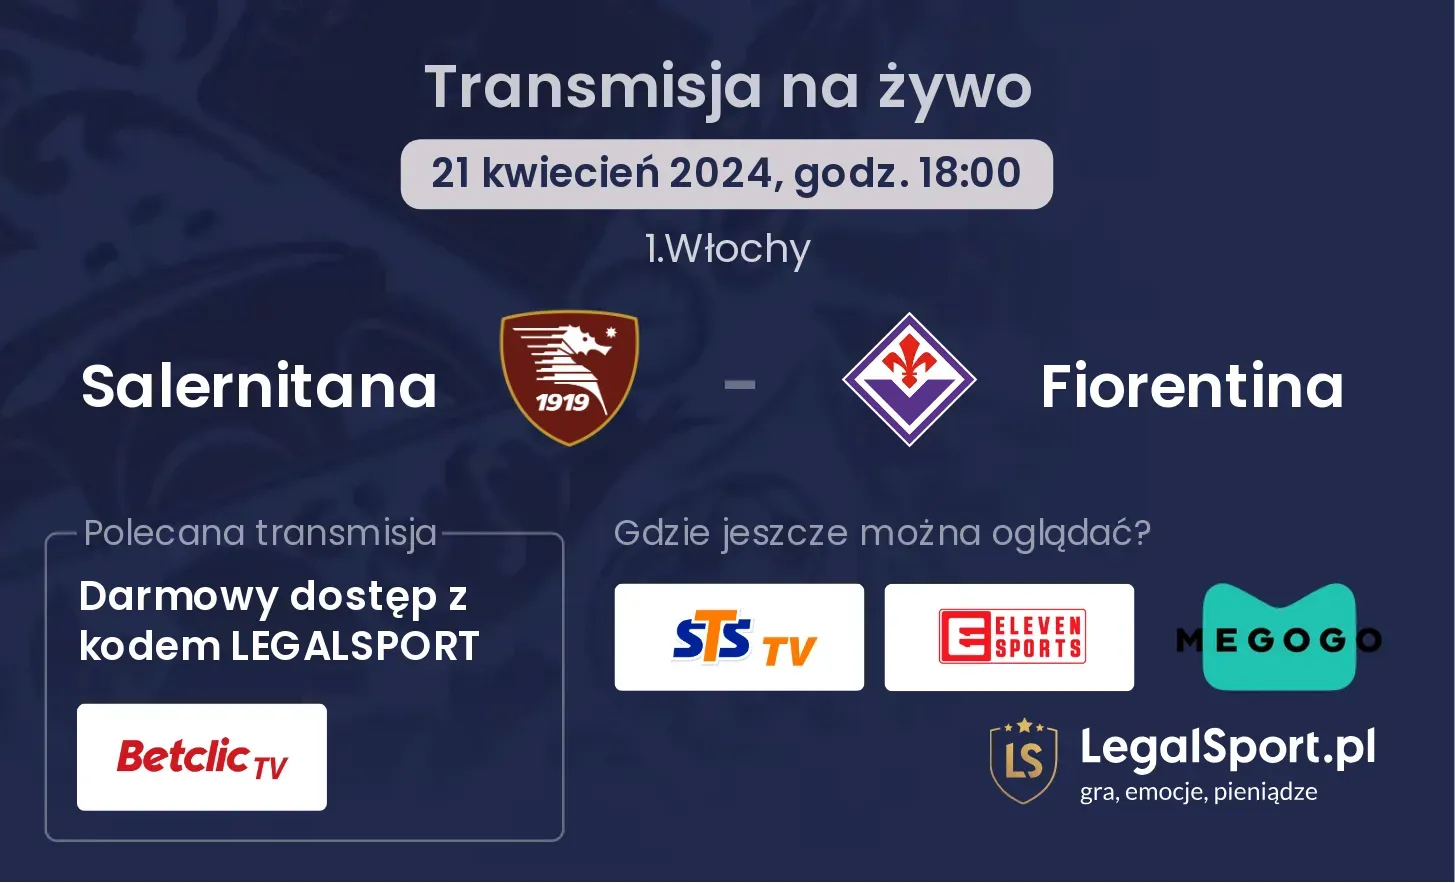 Salernitana - Fiorentina transmisja na żywo